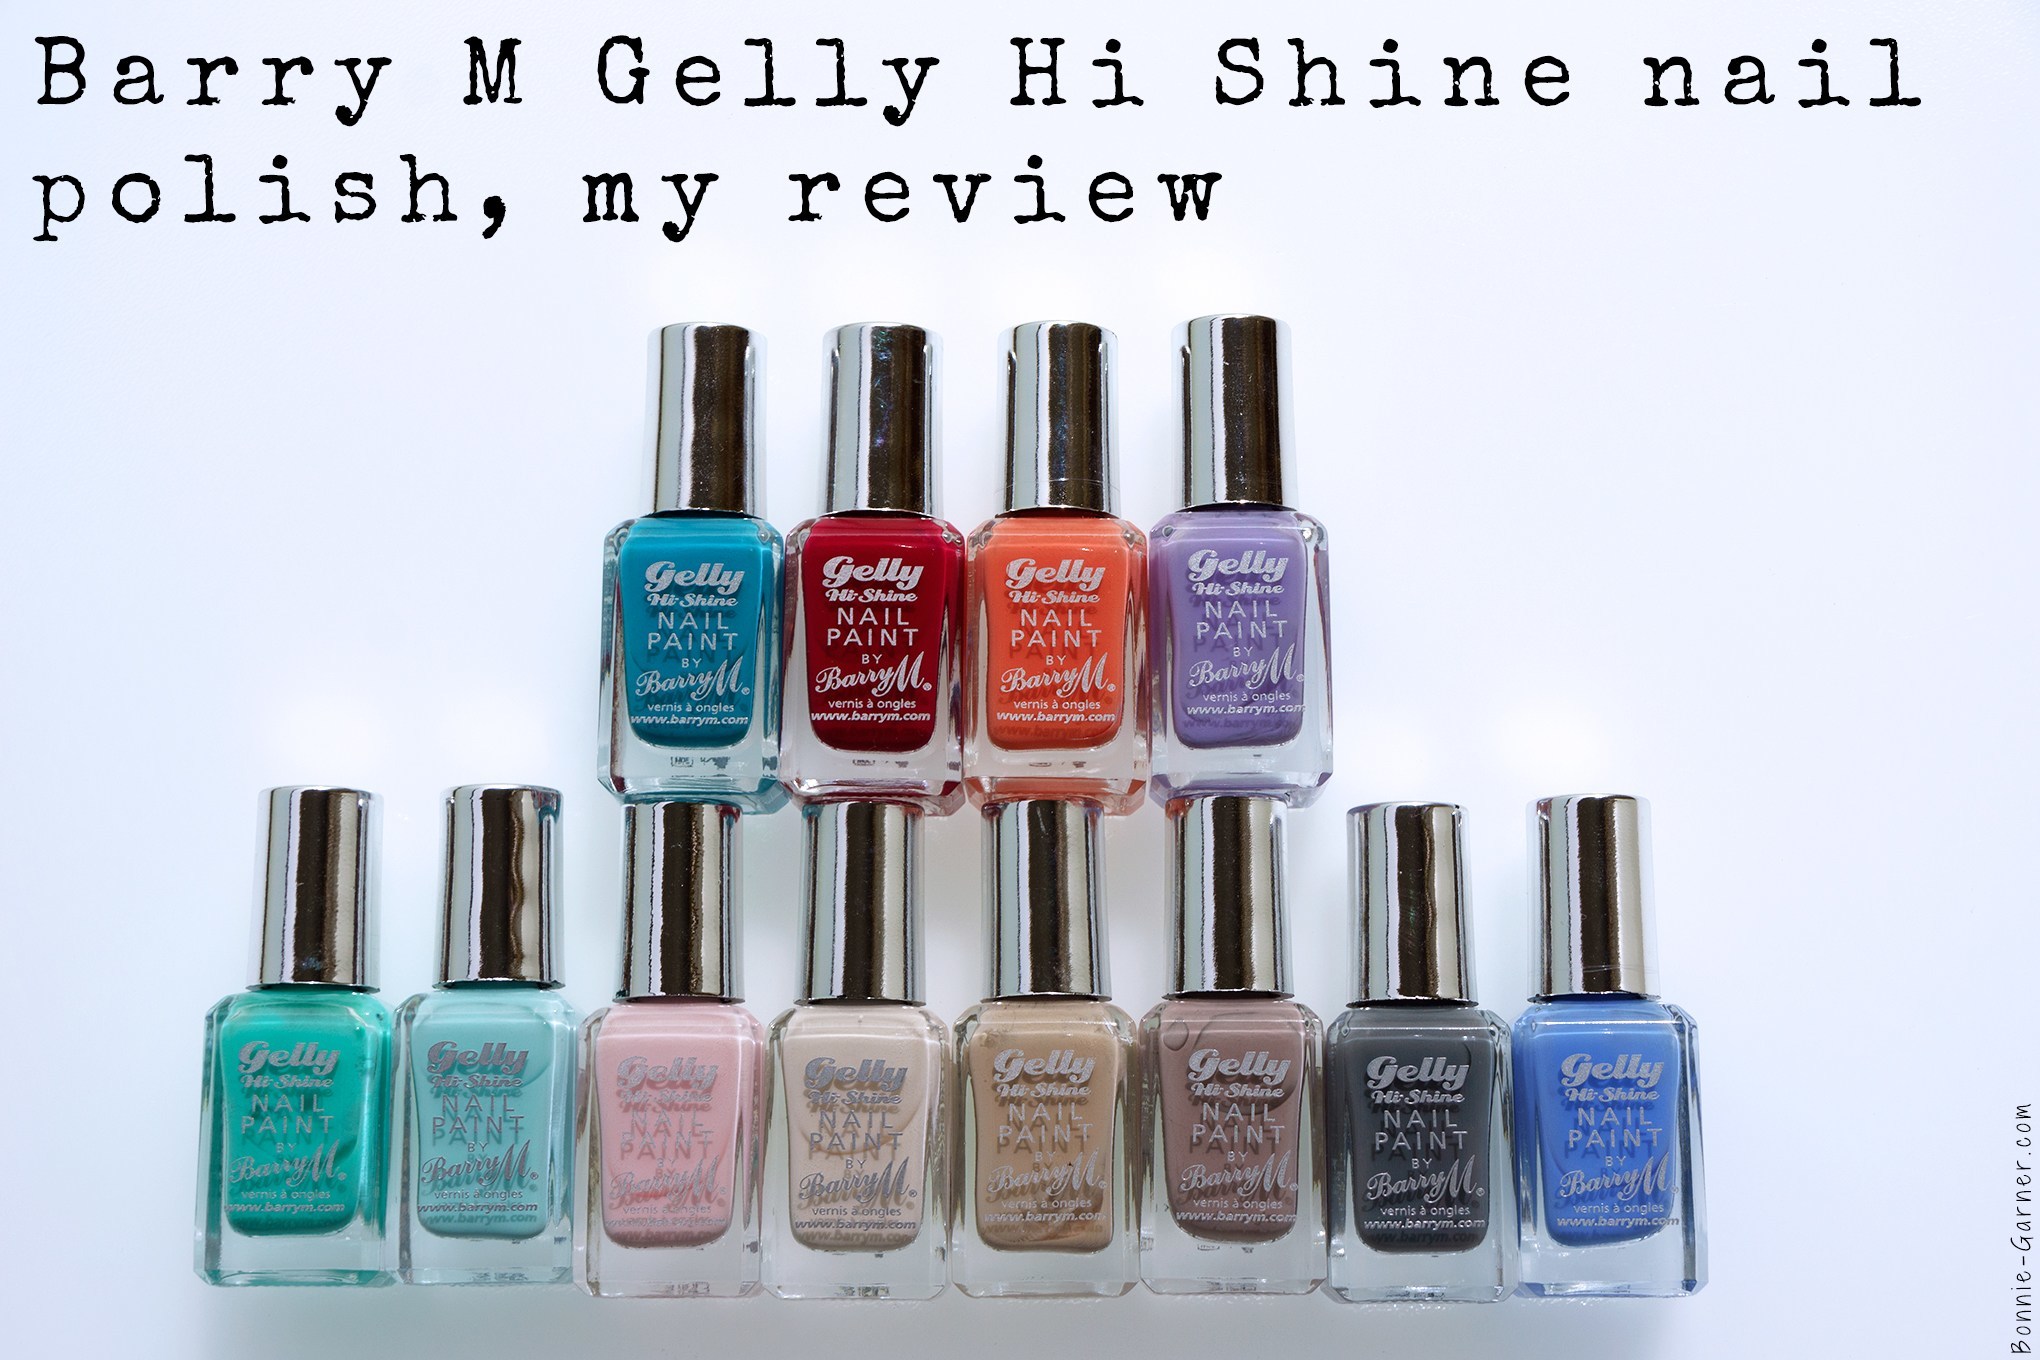 Barry M Gelly Hi Shine nail polish, my review